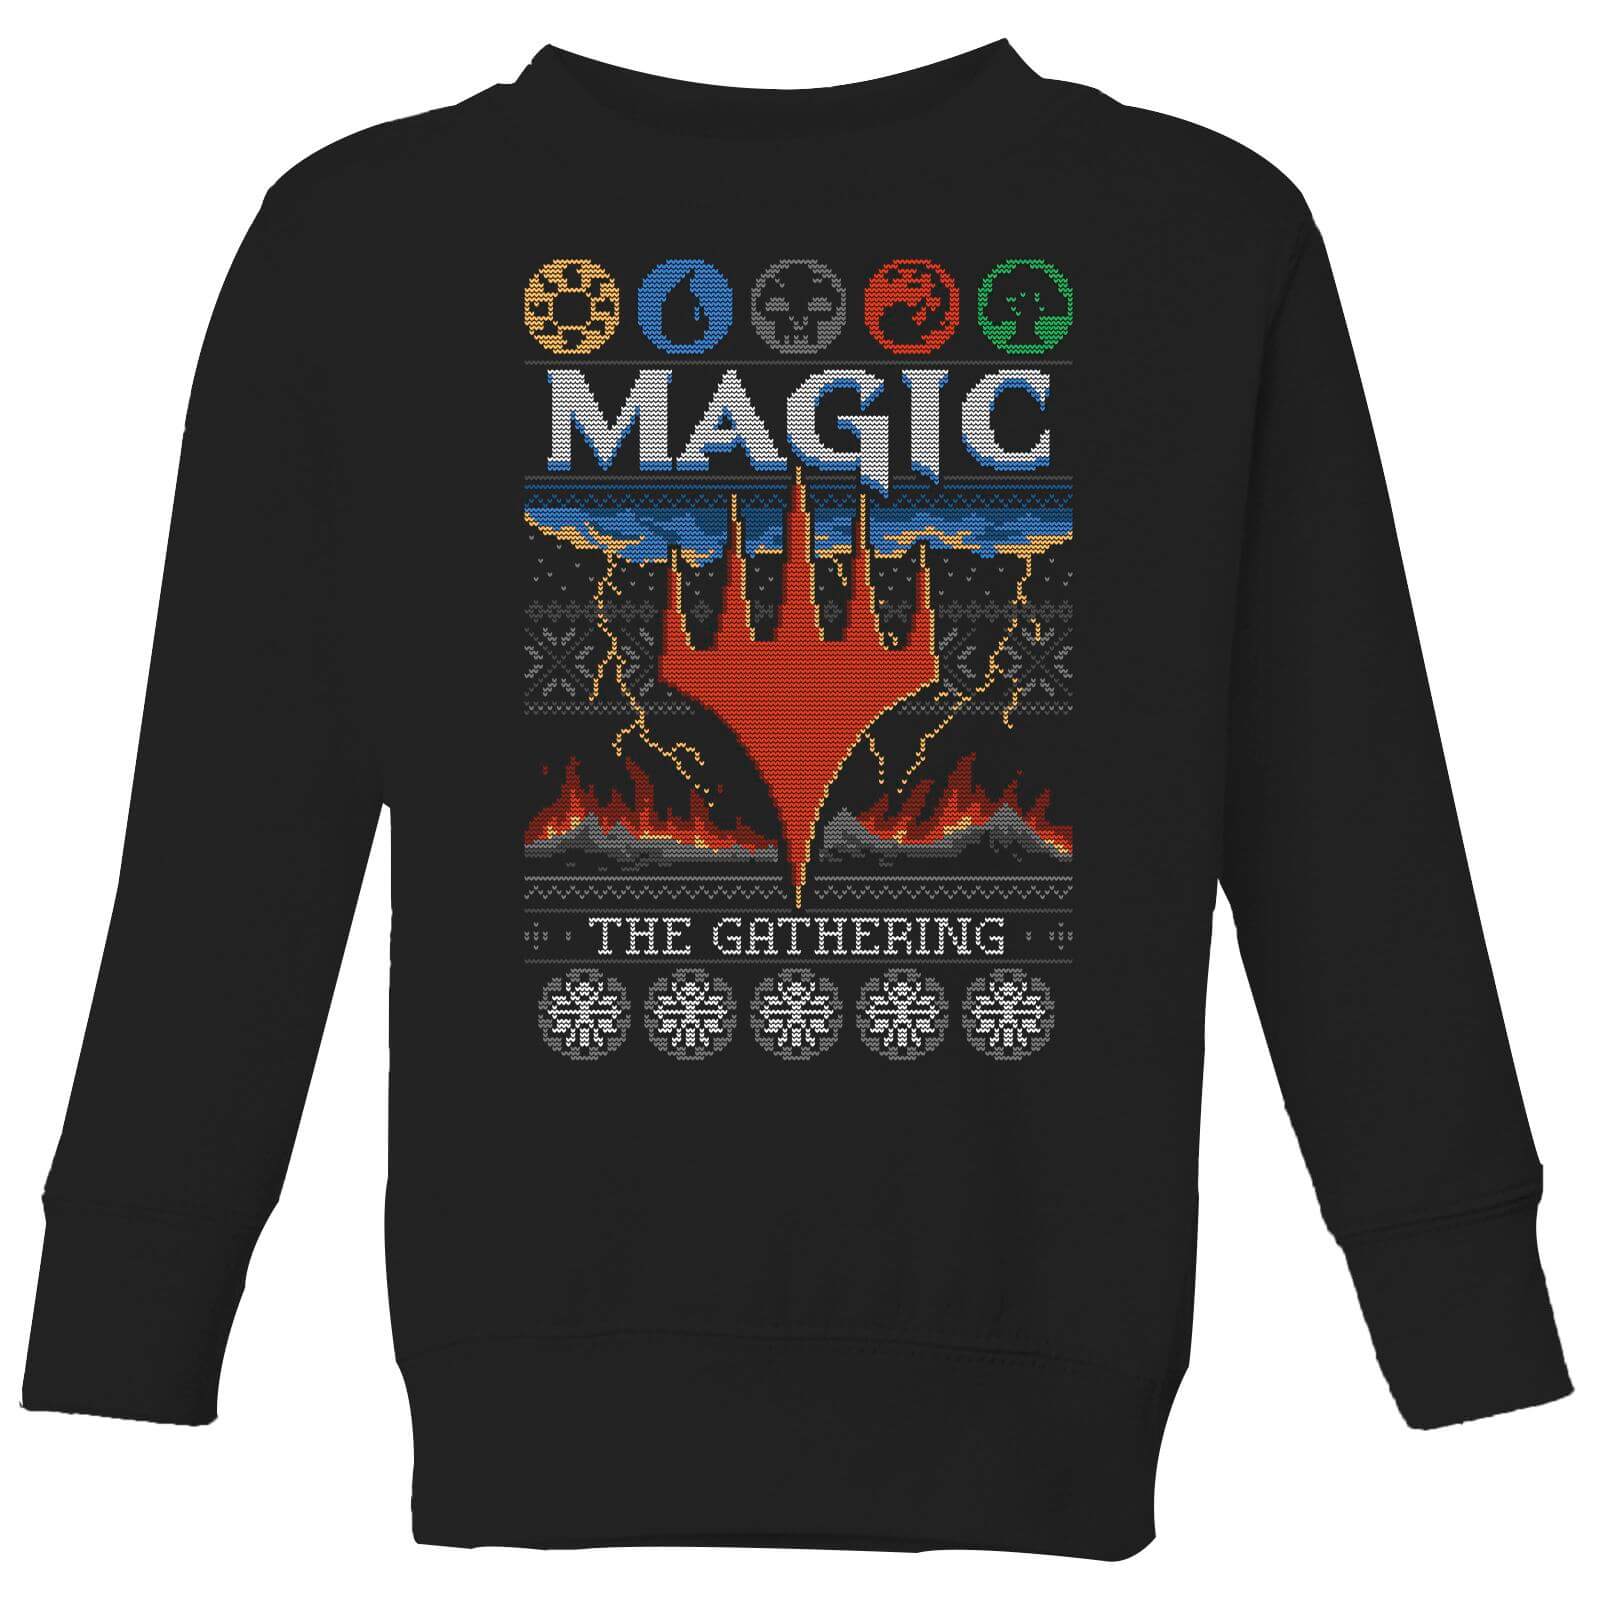 Magic The Gathering Colours Of Magic Knit Kids' Christmas Sweatshirt - Black - 7-8 Years - Black